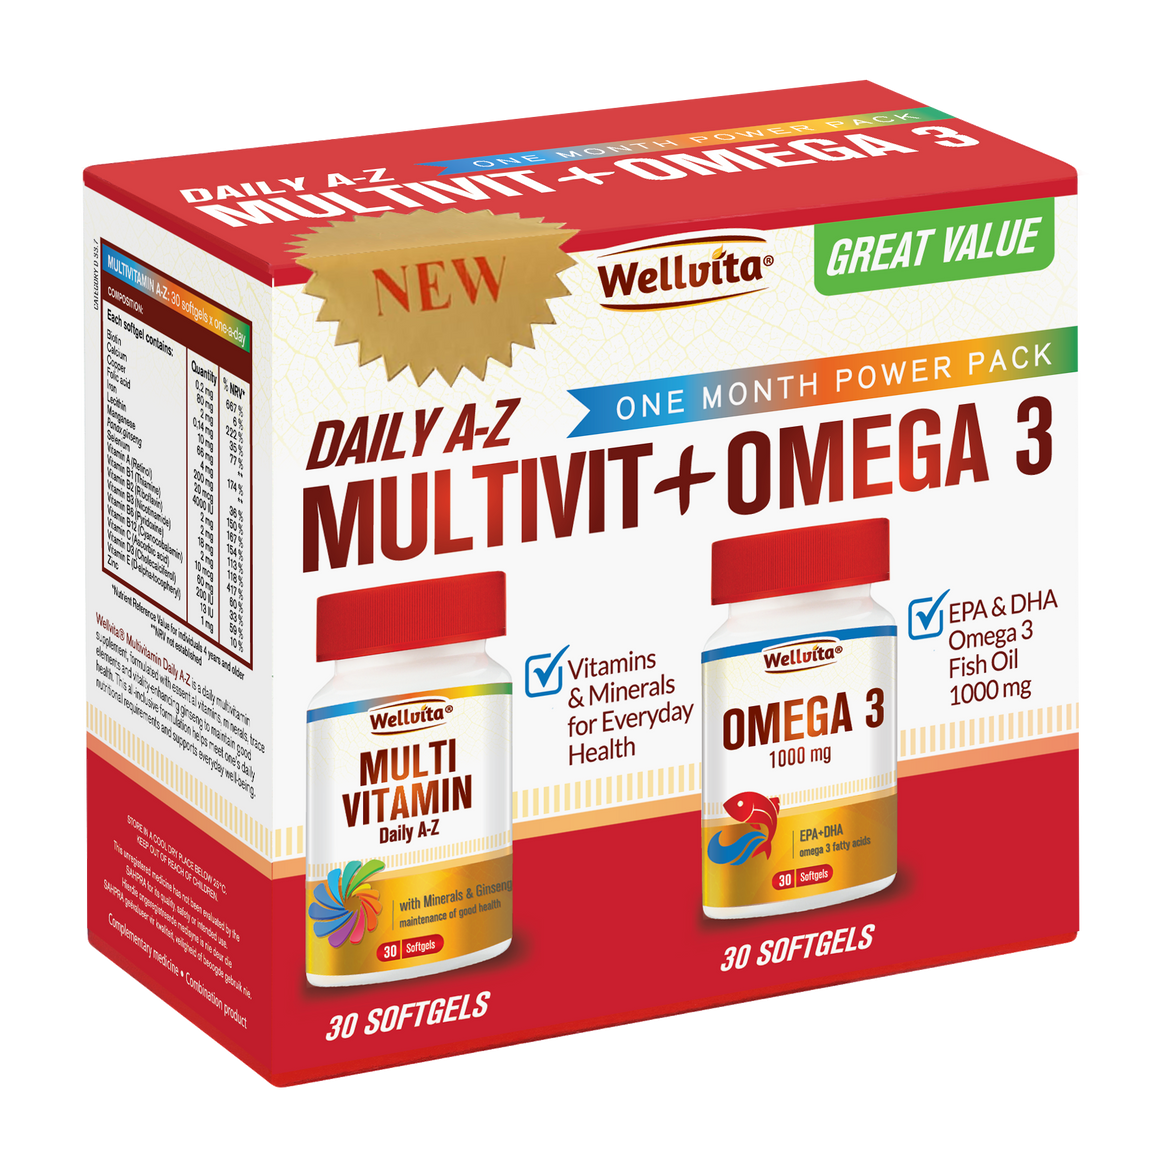 Wellvita Multivit A-Z + Omega 3 Power Pack